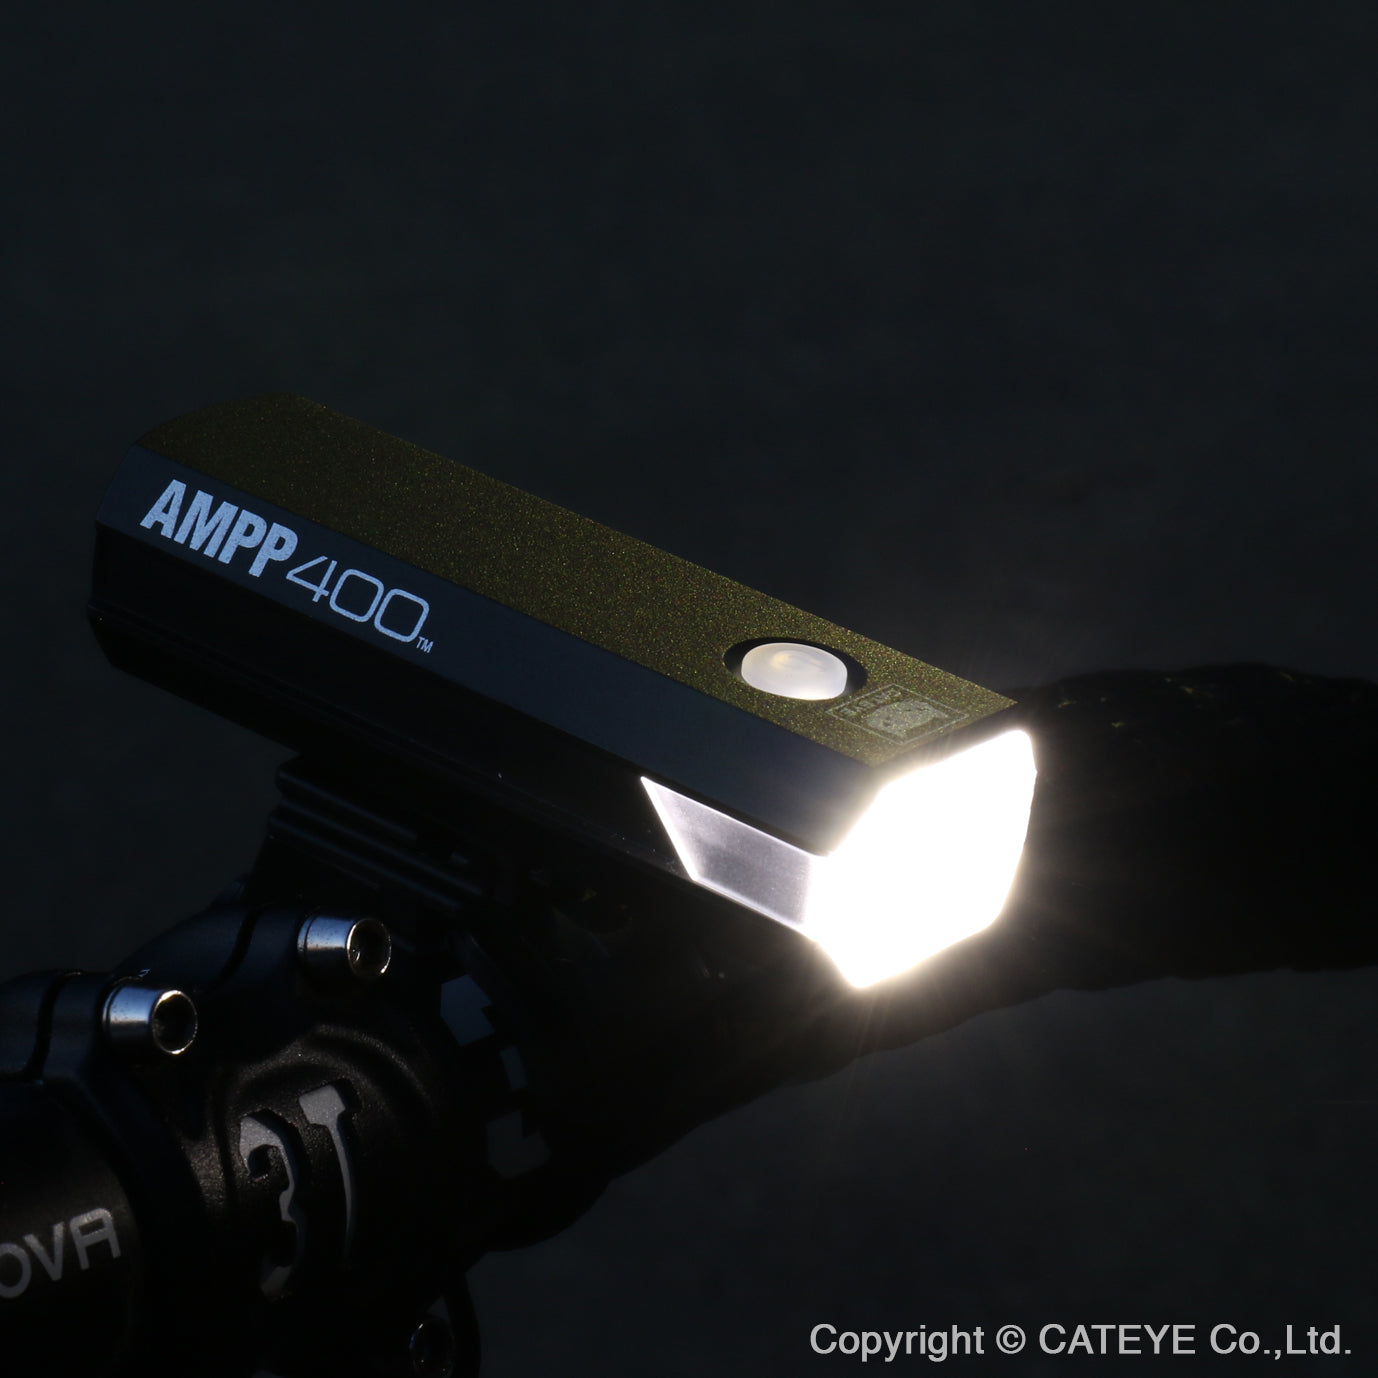 CATEYE USB 叉電前燈~AMPP400~HL-EL084RC / CATEYE USB RECHARGEABLE LIGHT~AMPP400~HL-EL084RC